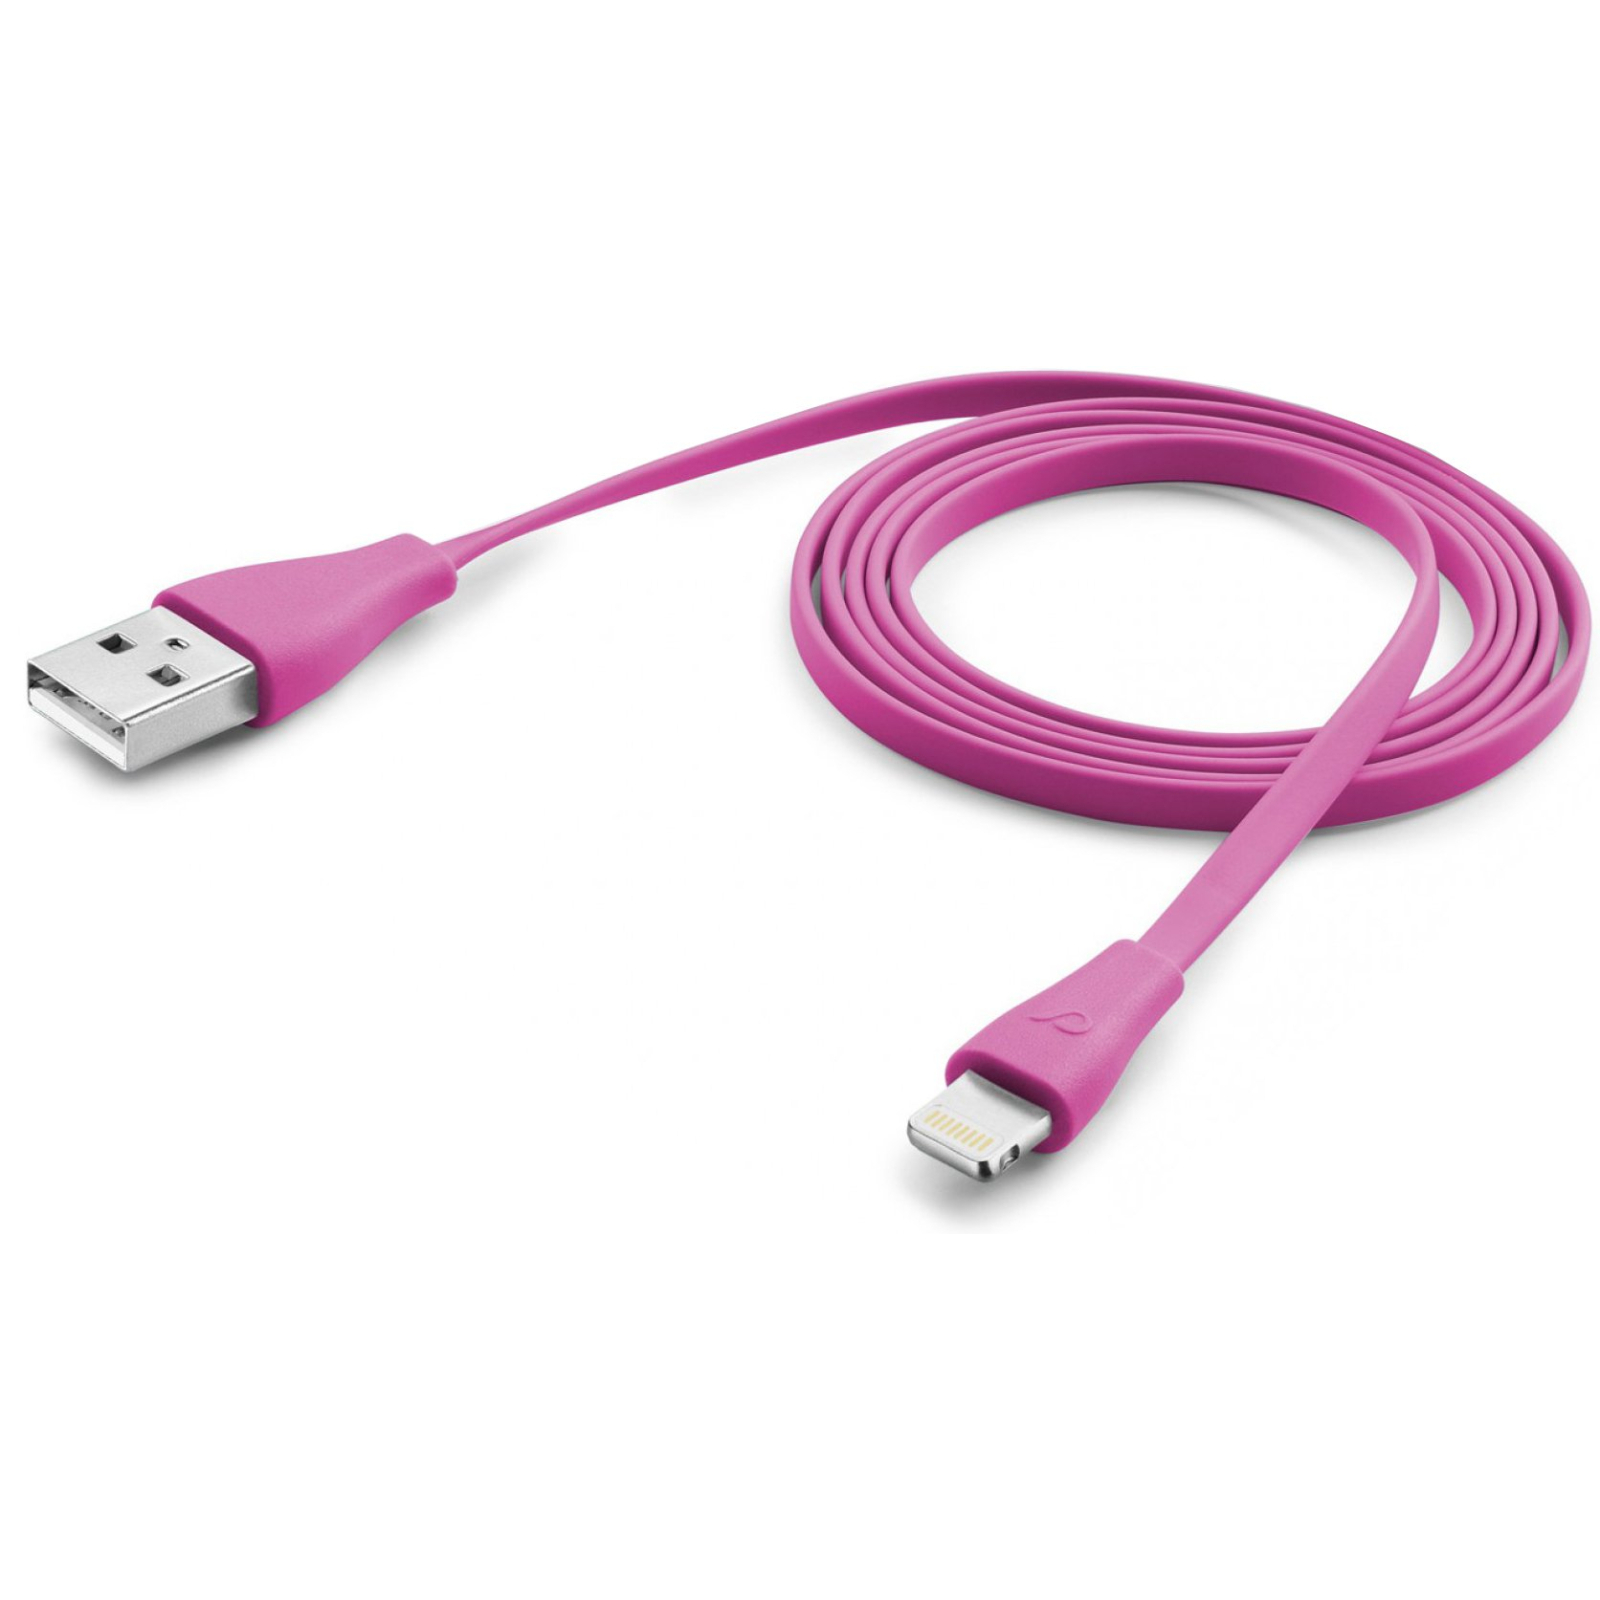 Дата кабель USB 2.0 AM to Lightning 1.0m blue Cellularline (USBDATACFLMFIIPH5B)